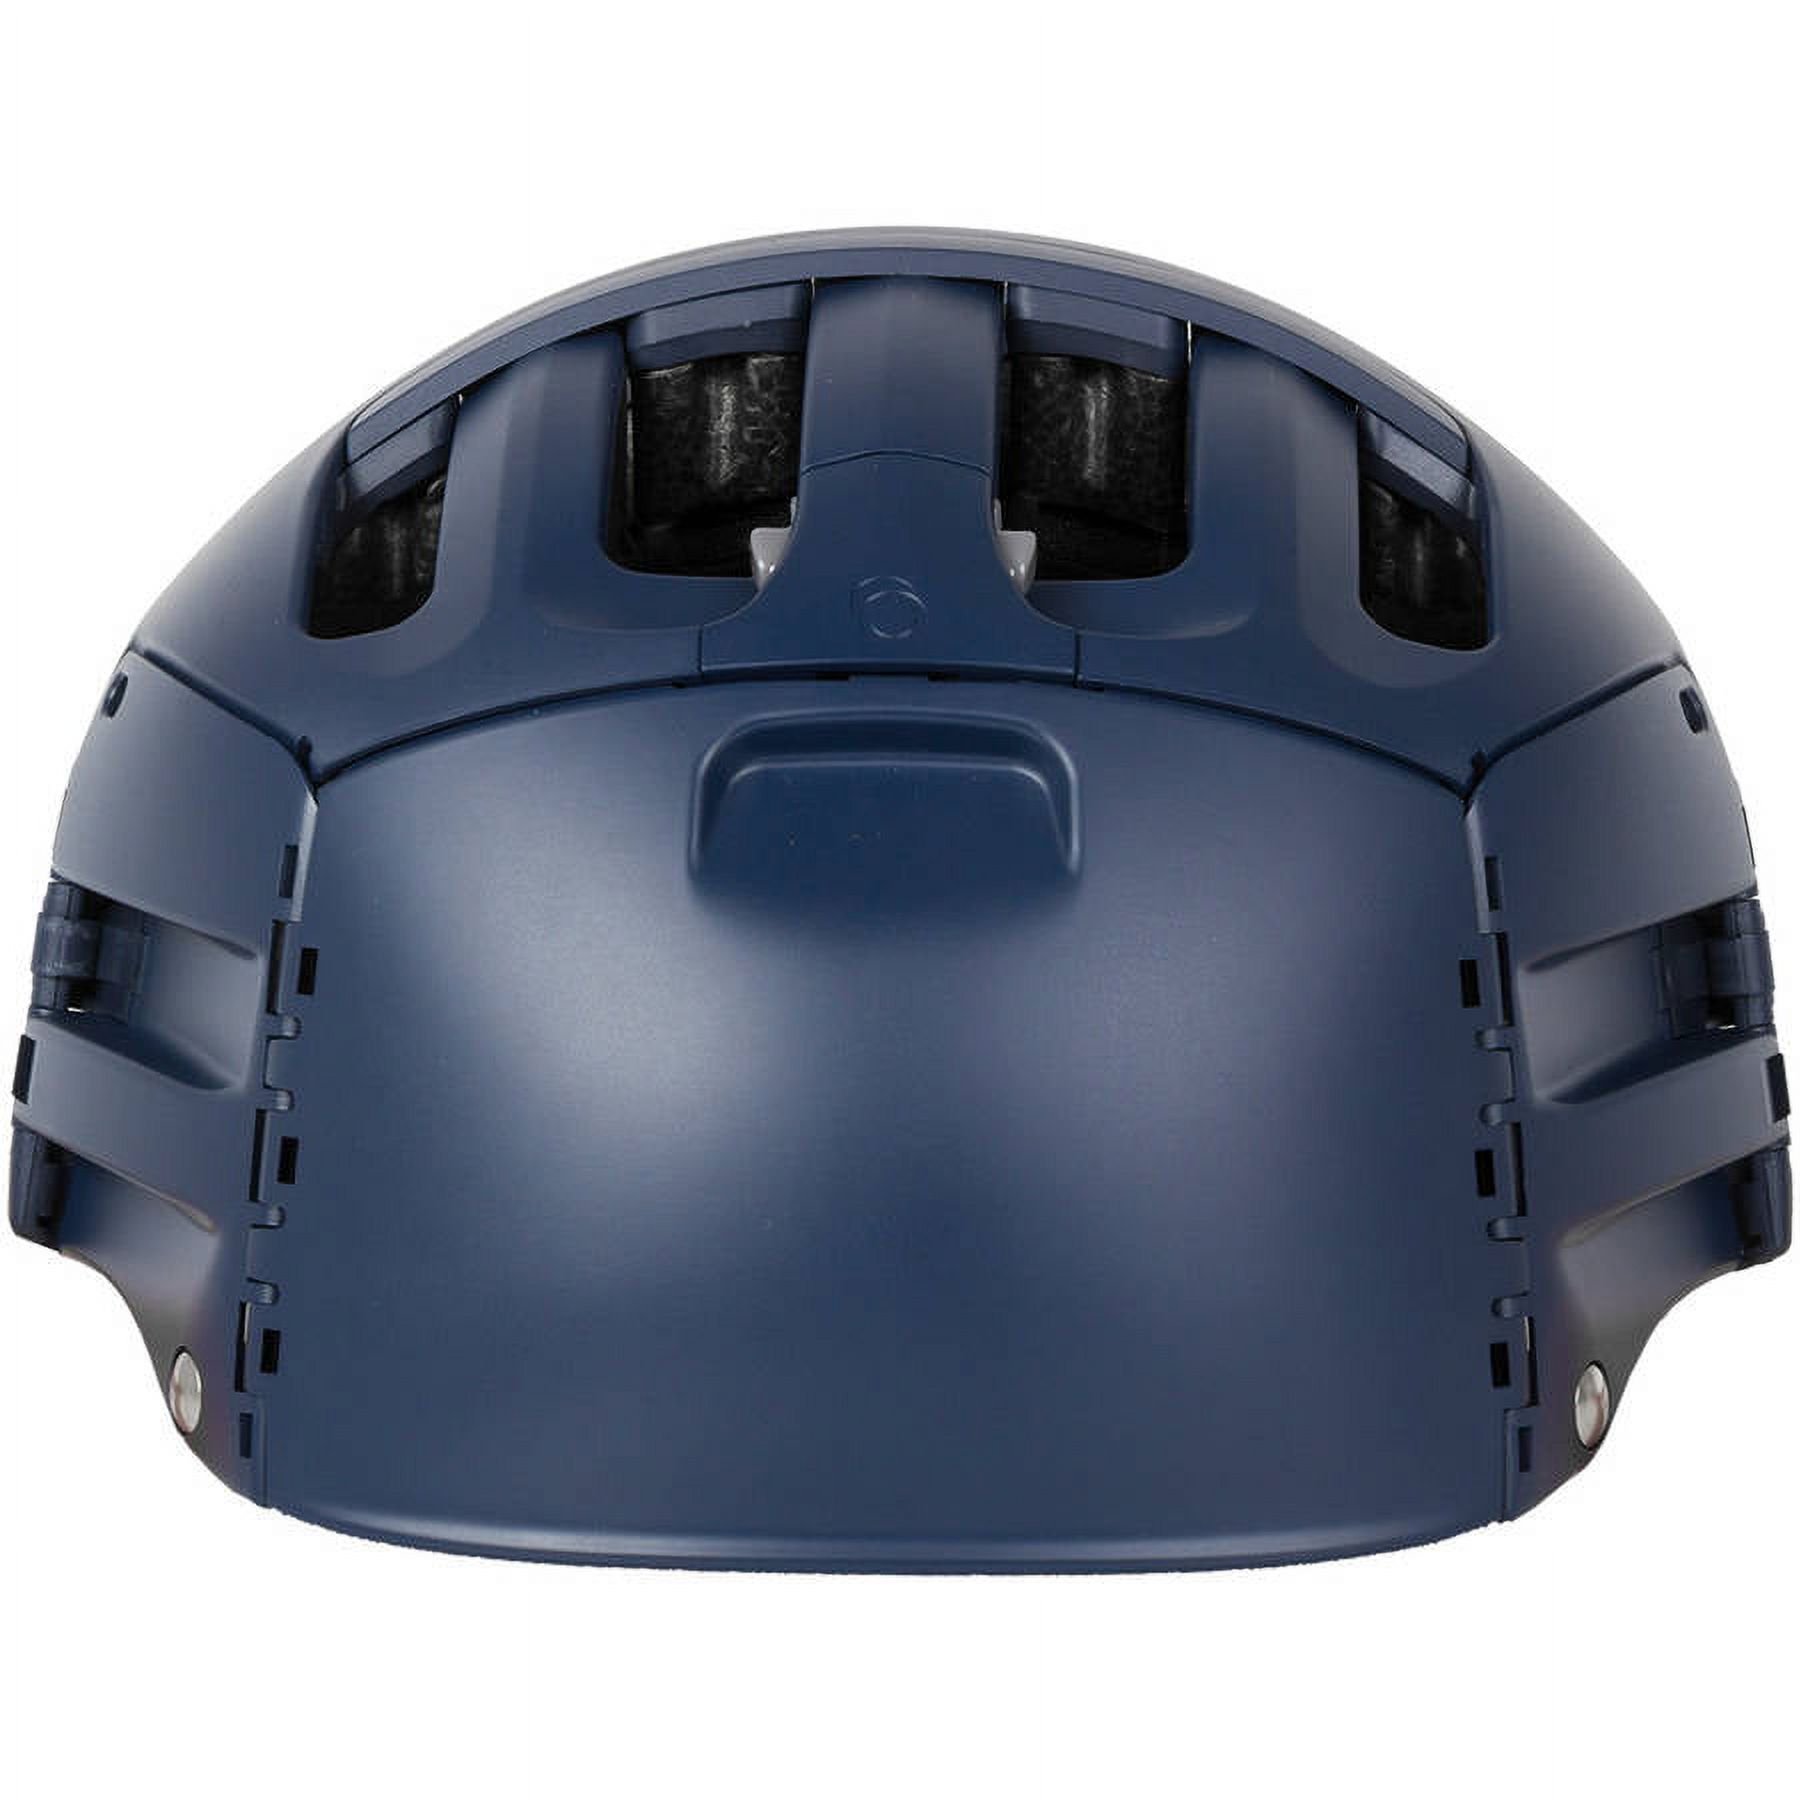 Overade Plixi Foldable Bicycle Helmet, Navy Blue, 54-58cm - image 2 of 11